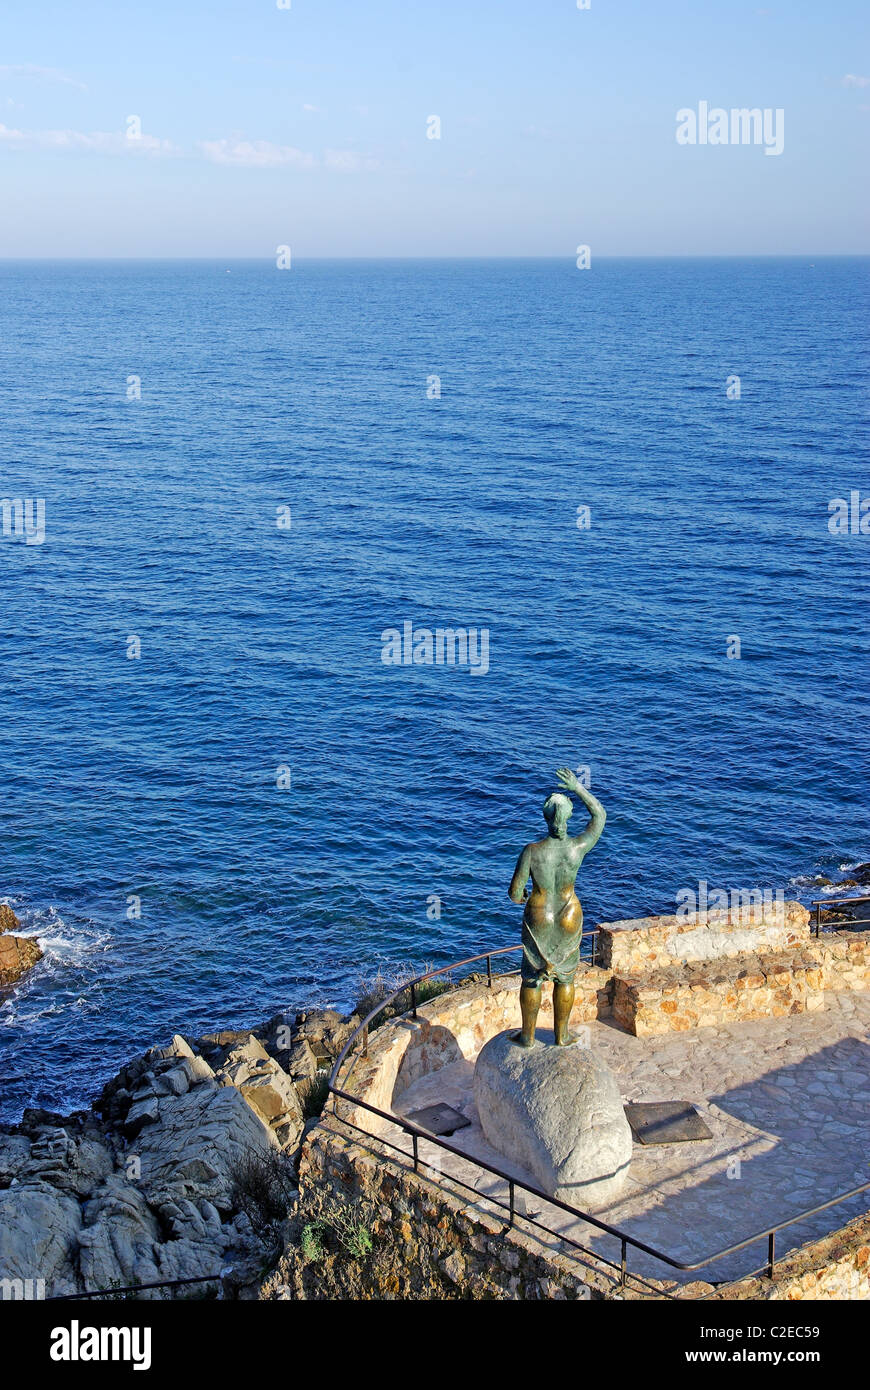 Statue en bronze de femme à la recherche de la mer. Lloret de Mar, Costa Brava, Espagne. Banque D'Images